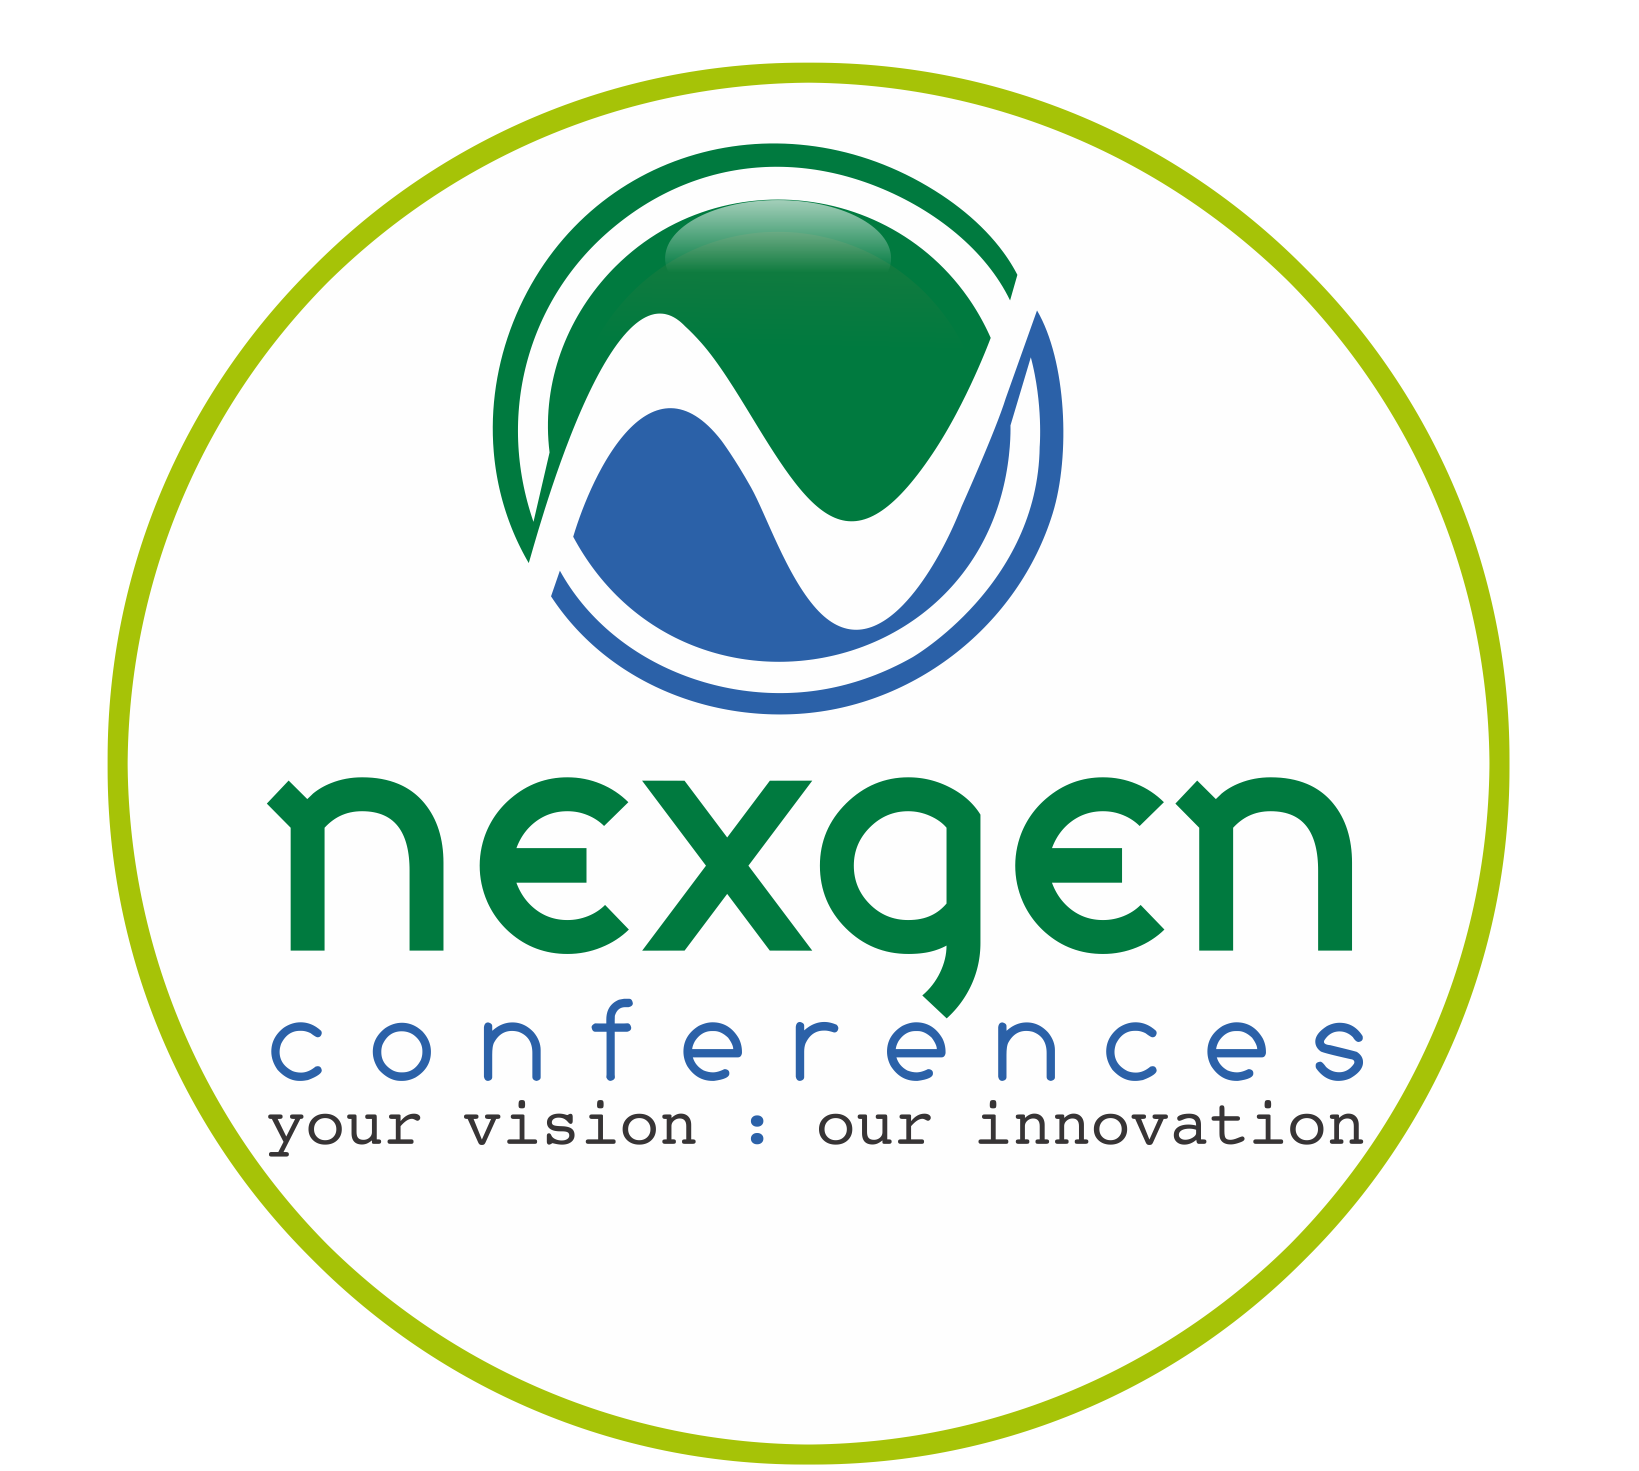 nexgen conference logo